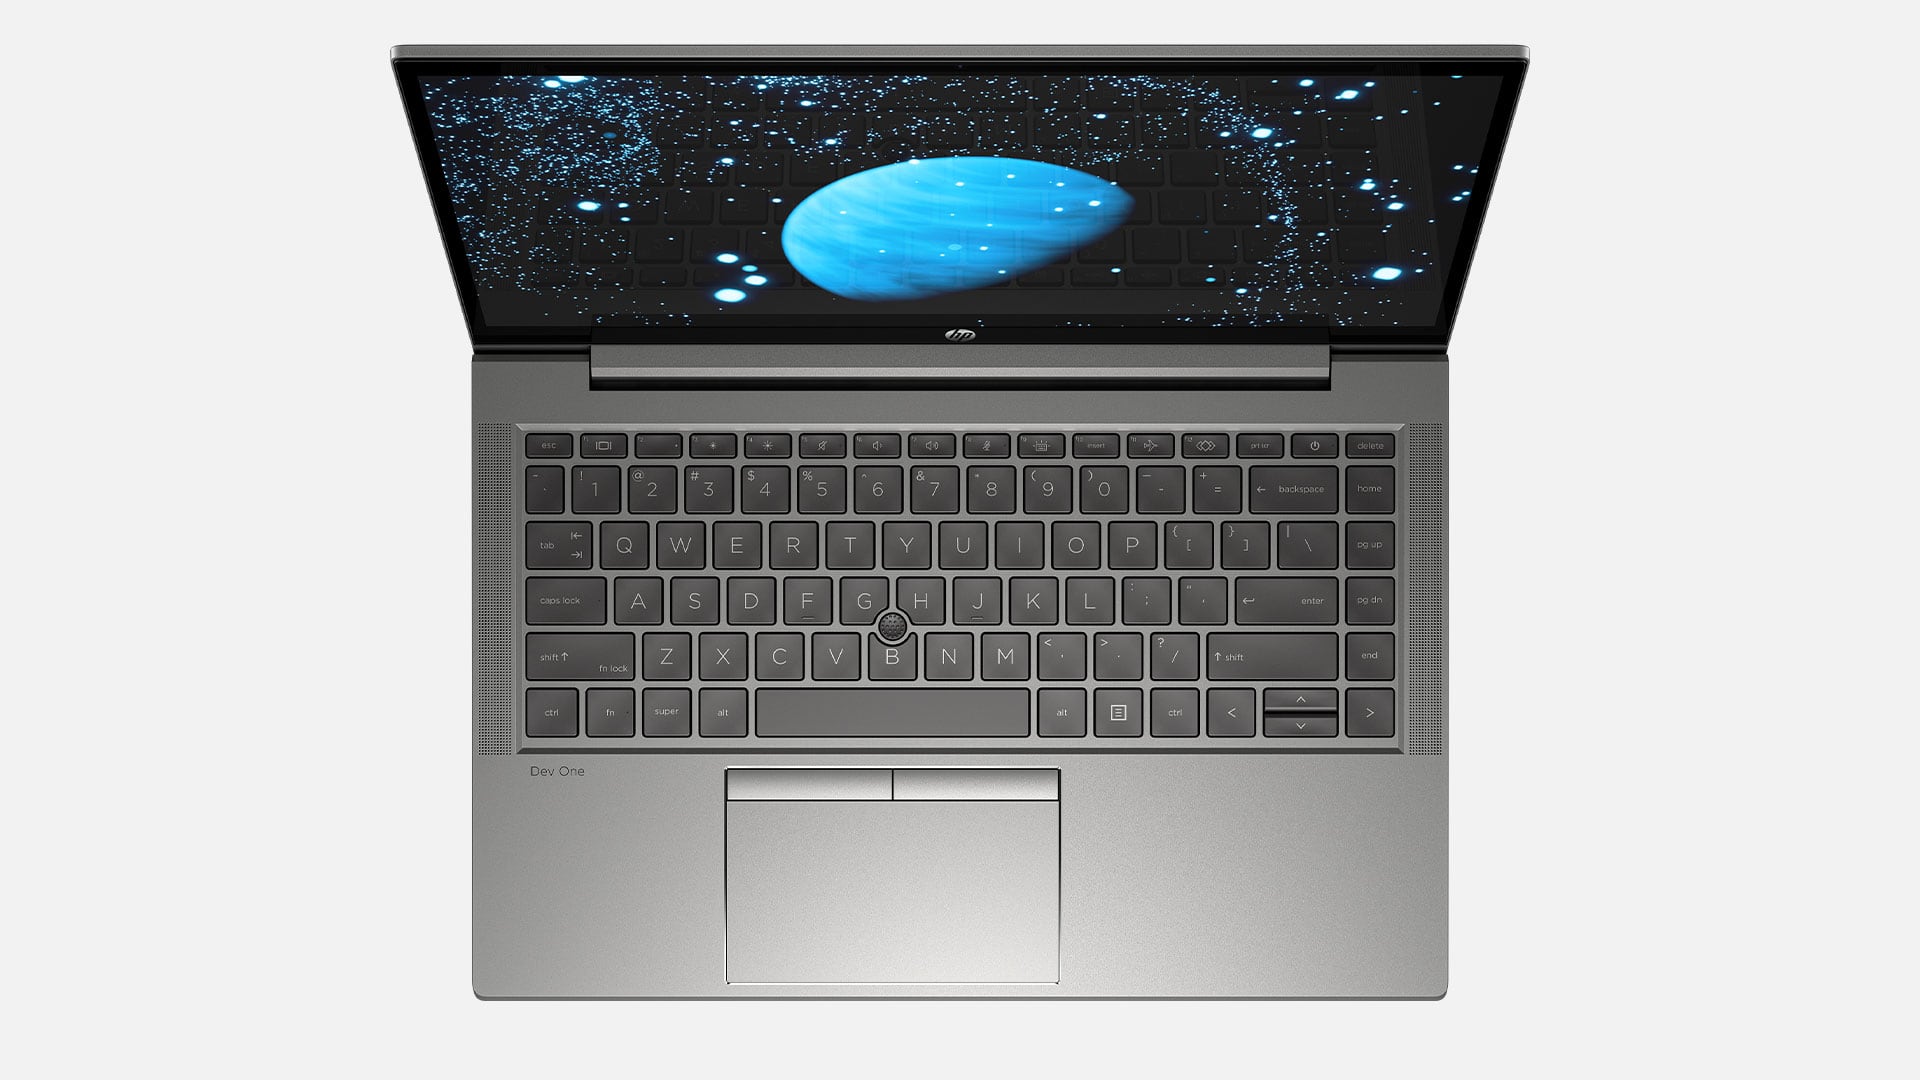 HP Dev One laptop - keyboard